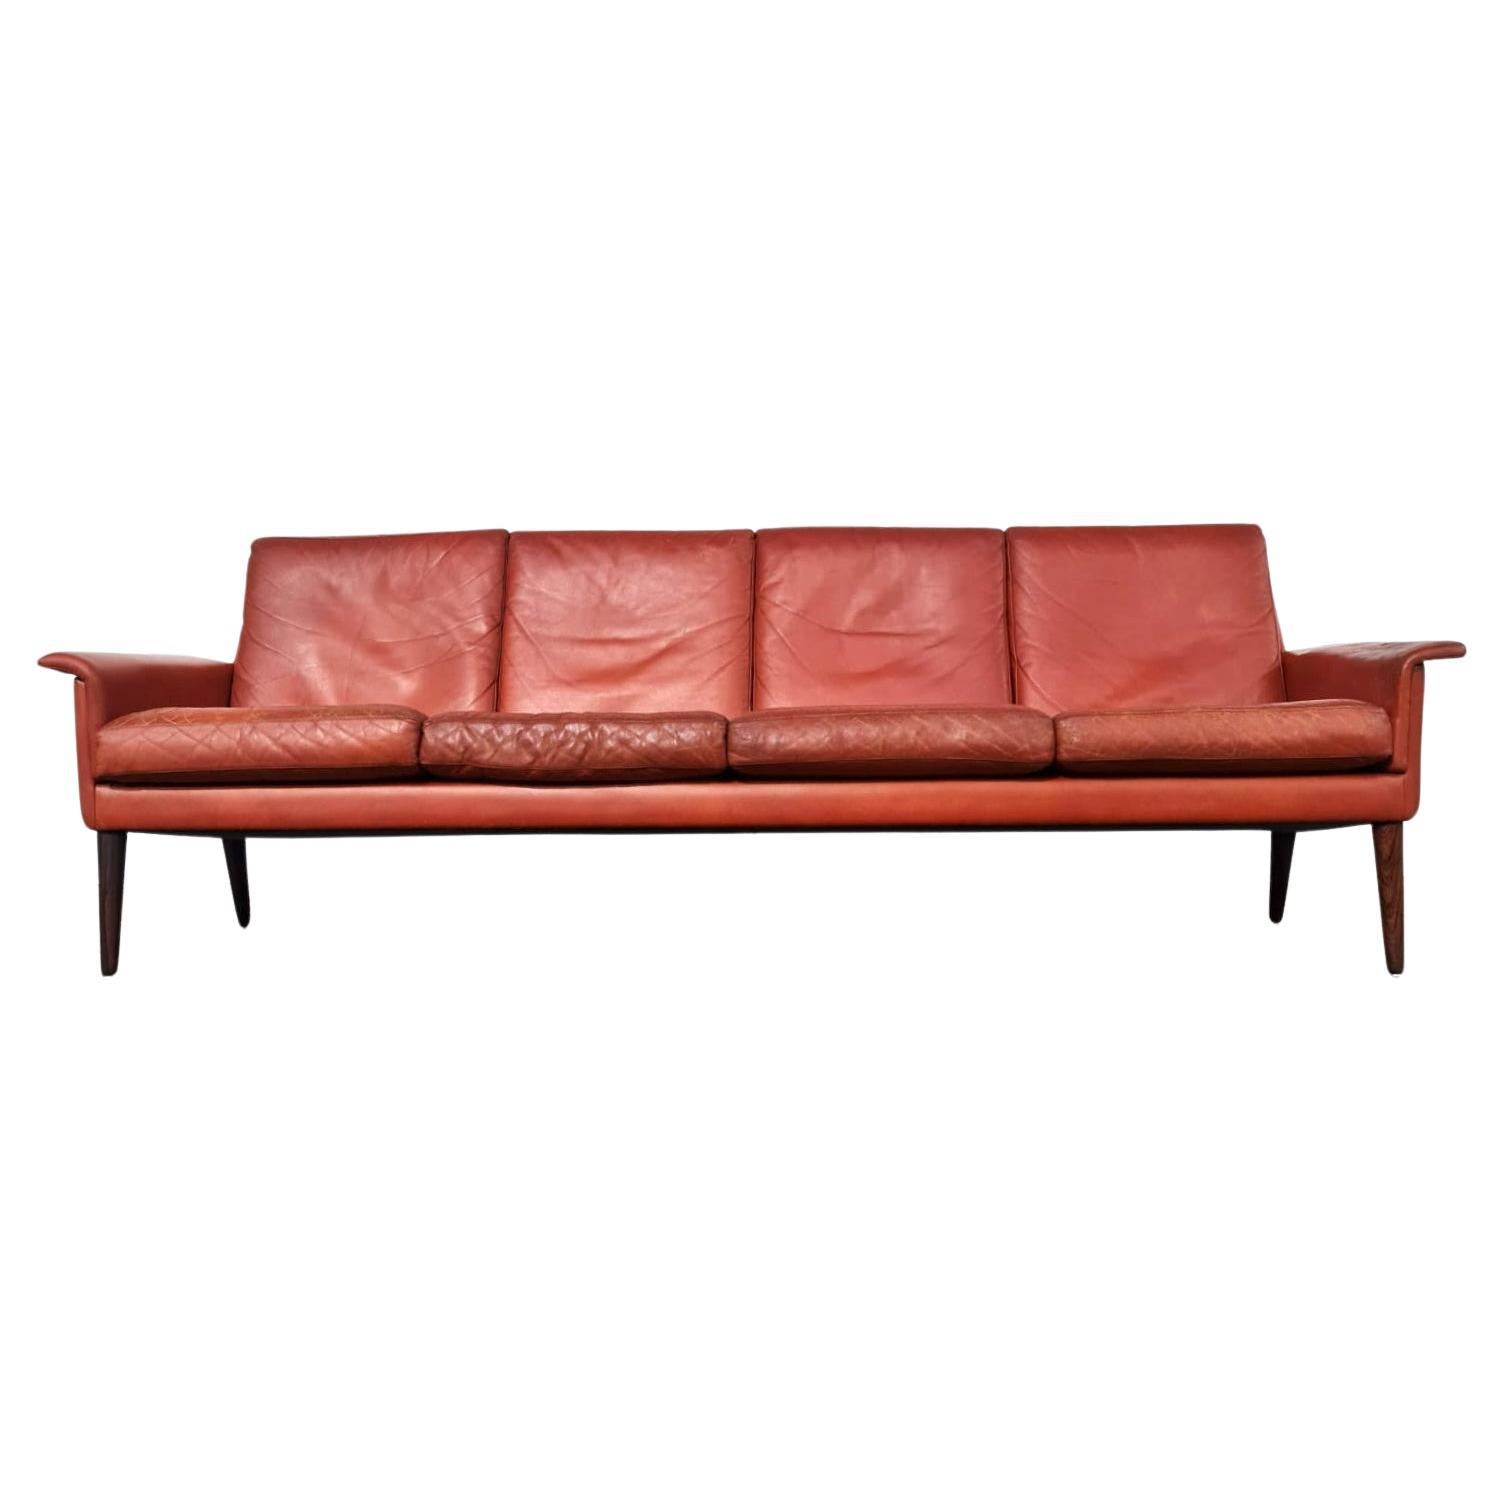 1960's Danish Borge Mogensen Leather Sofa